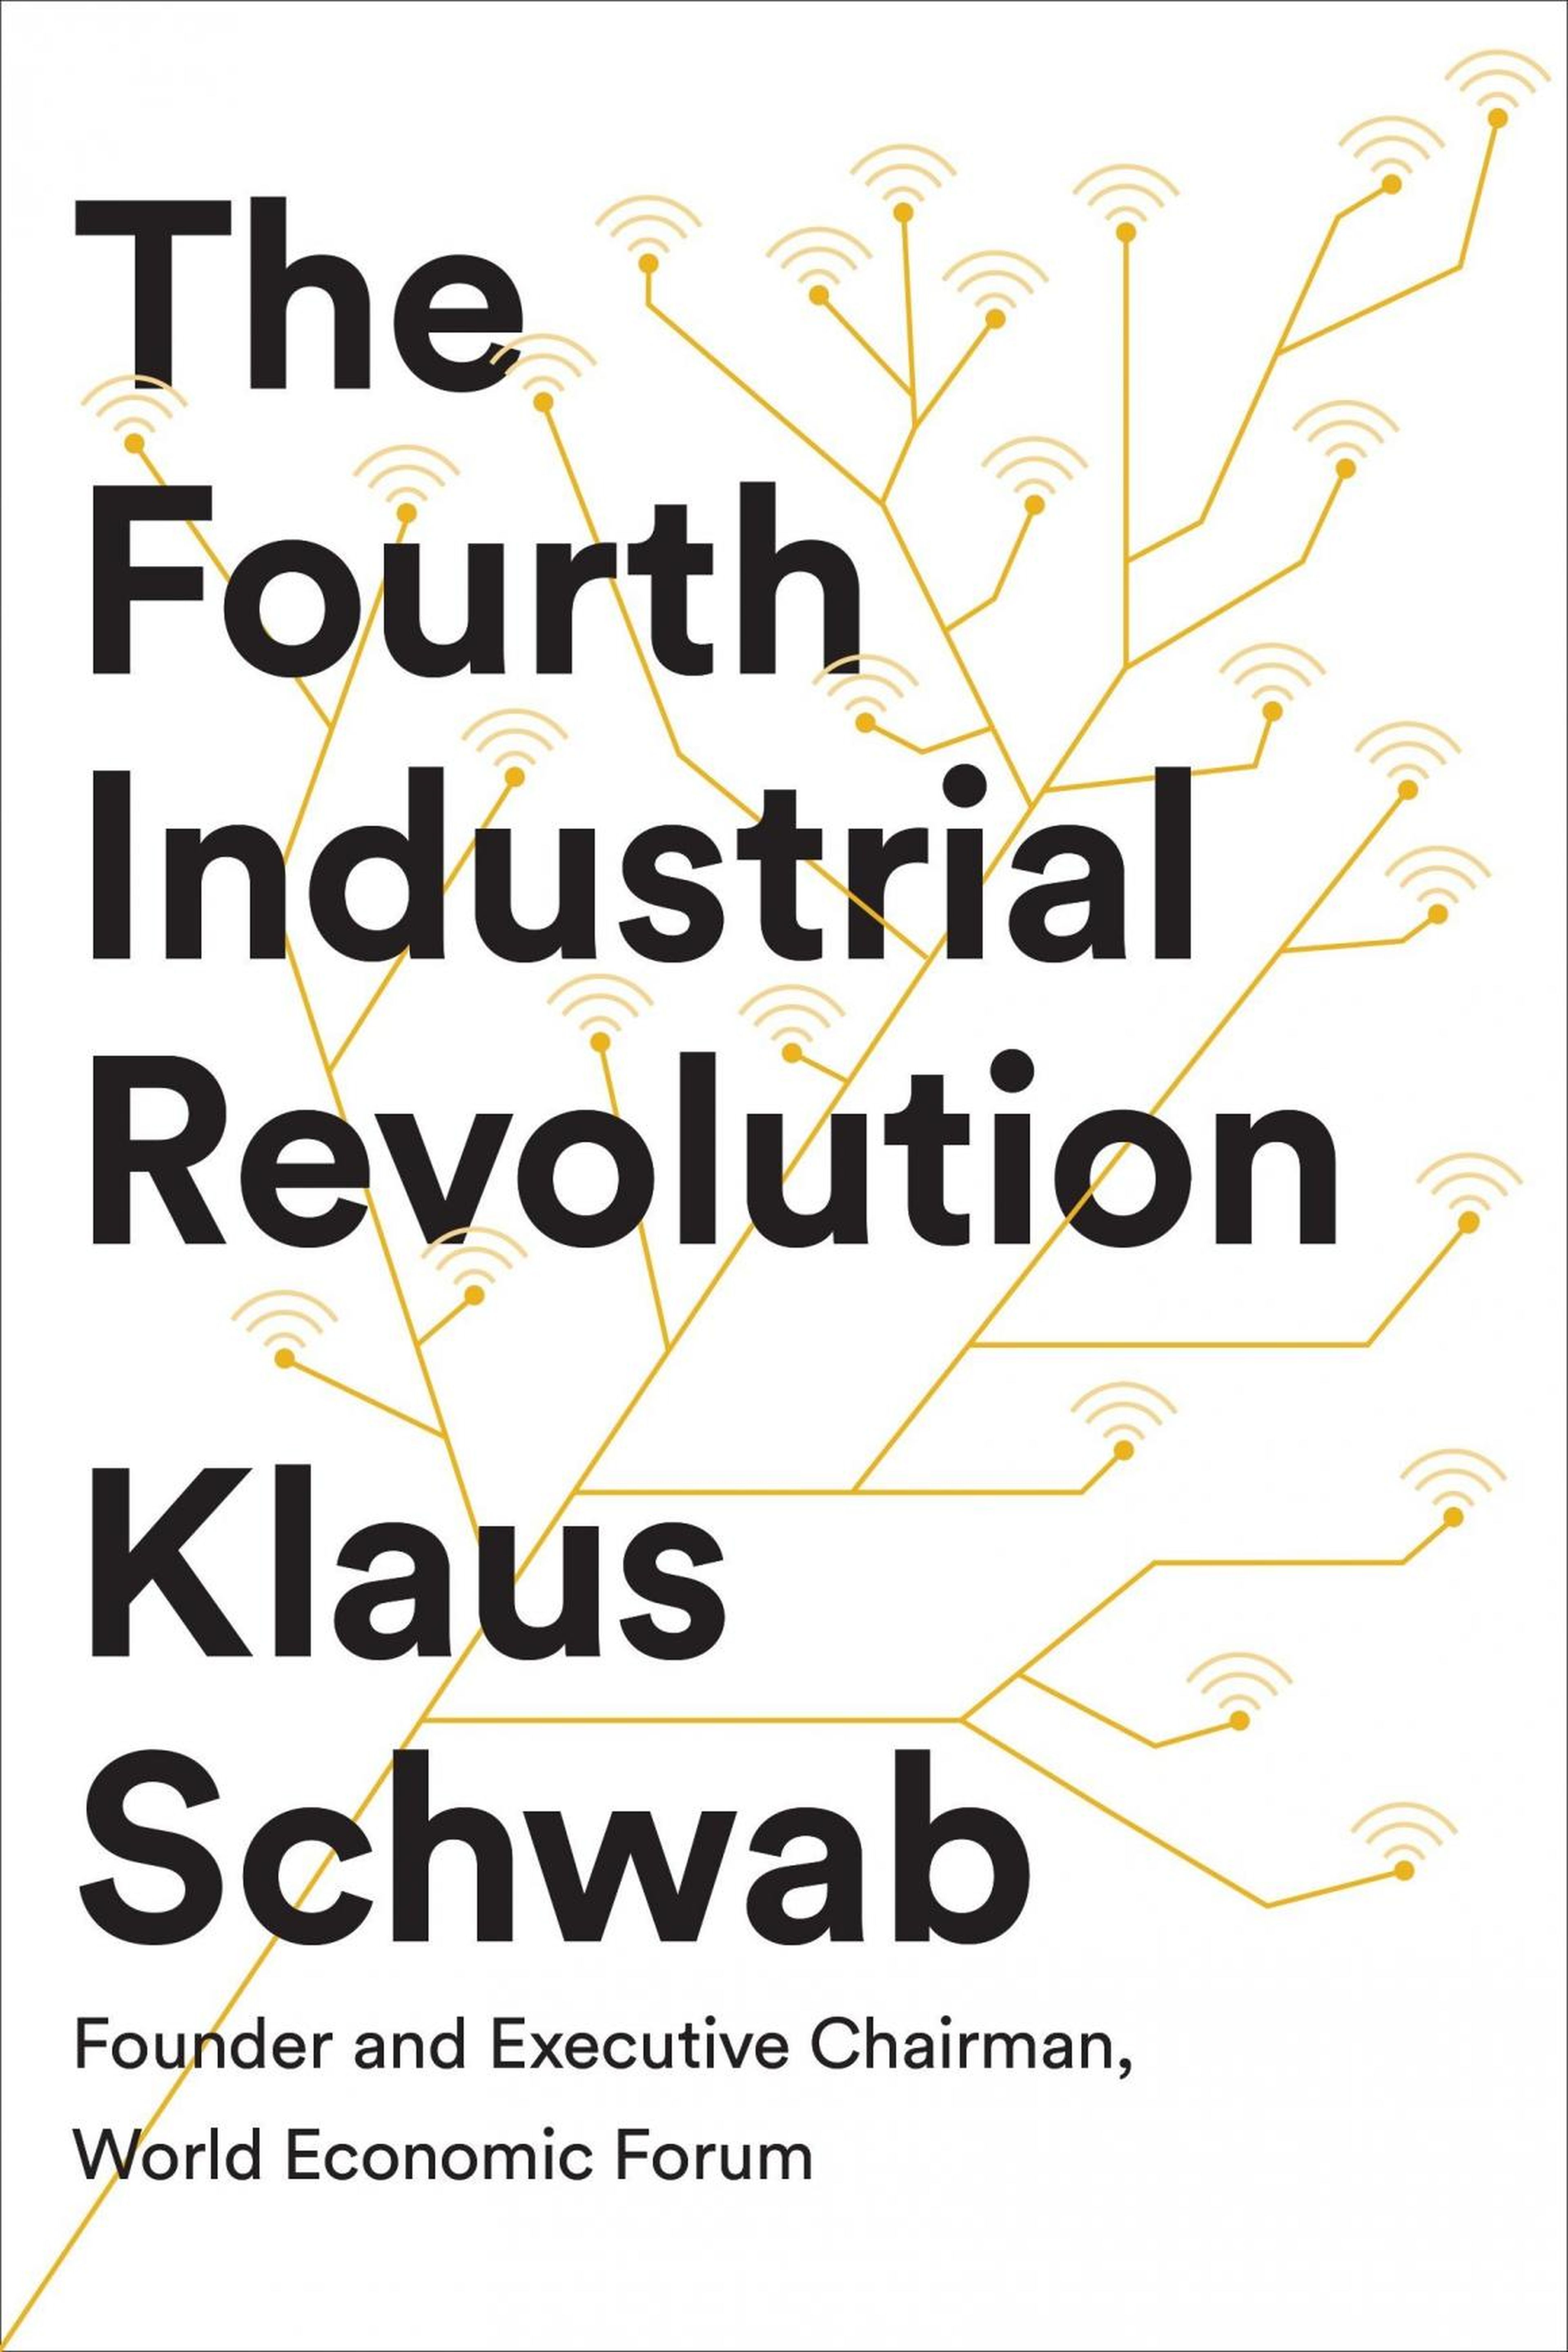 "The Fourth Industrial Revolution" by Klaus Schwab.